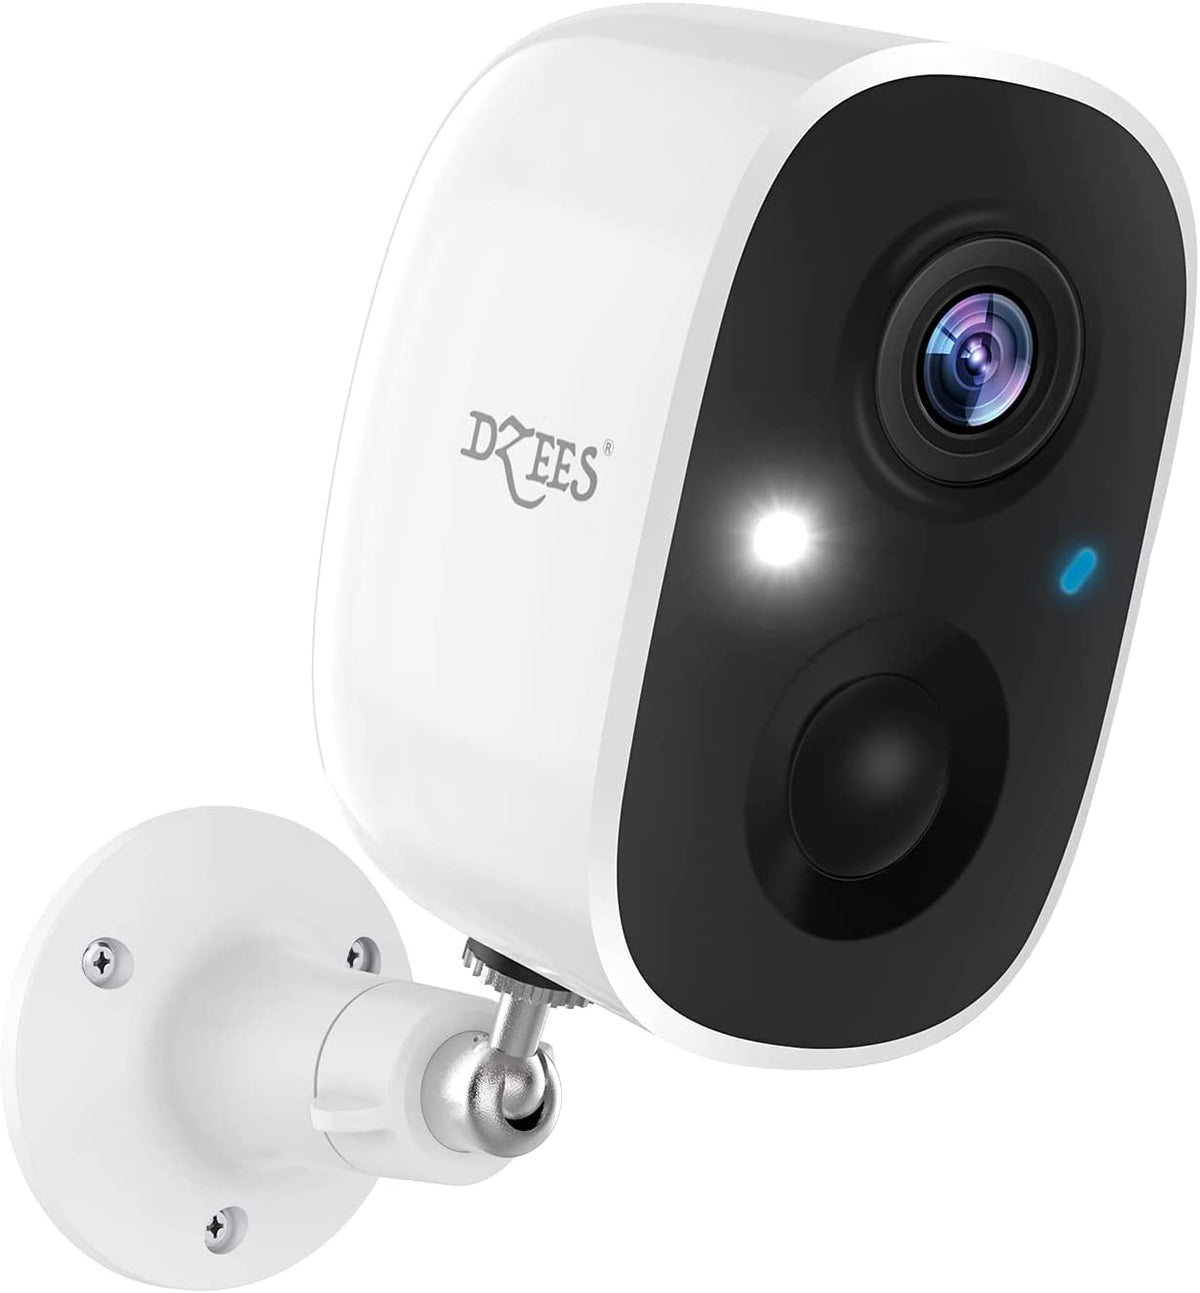 Dzees-CG6-wireless-security-camera